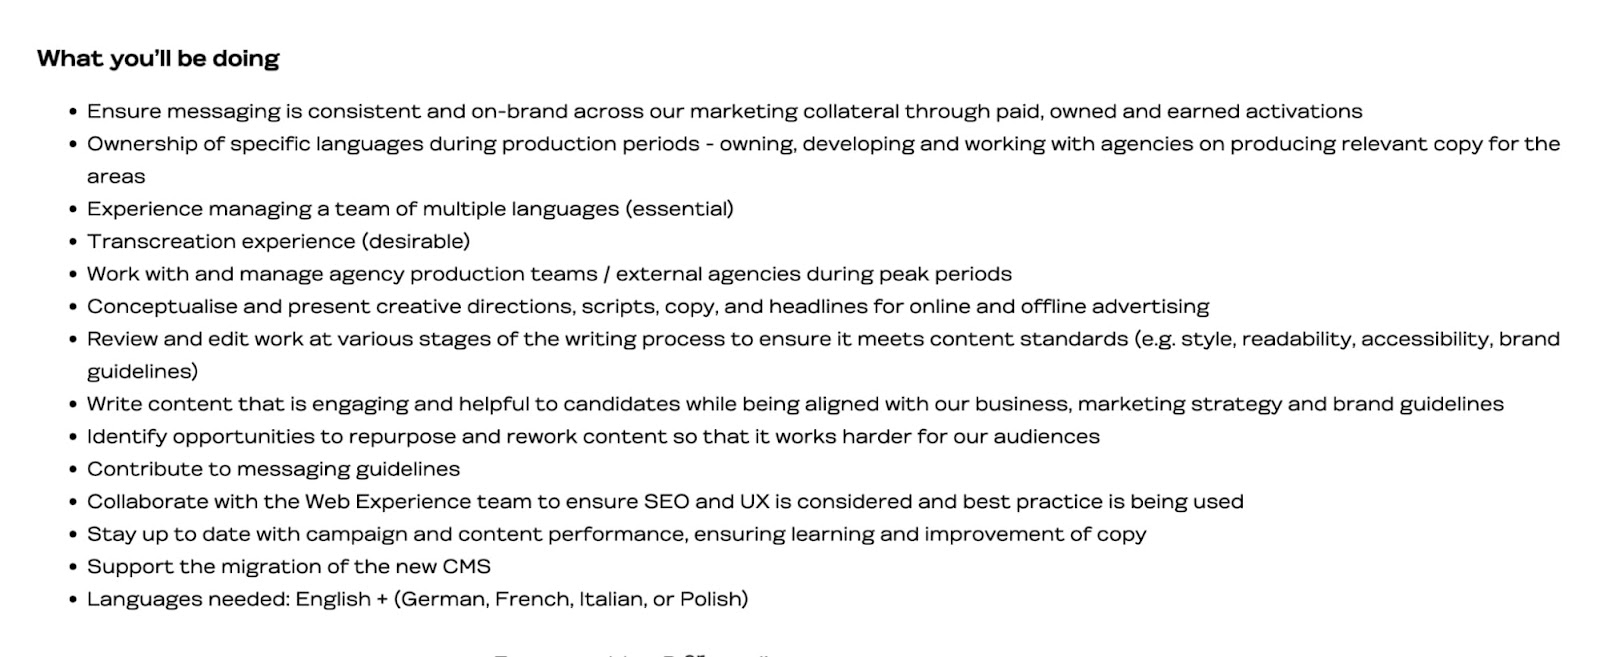 A job description for a Senior/Lead Copywriter position